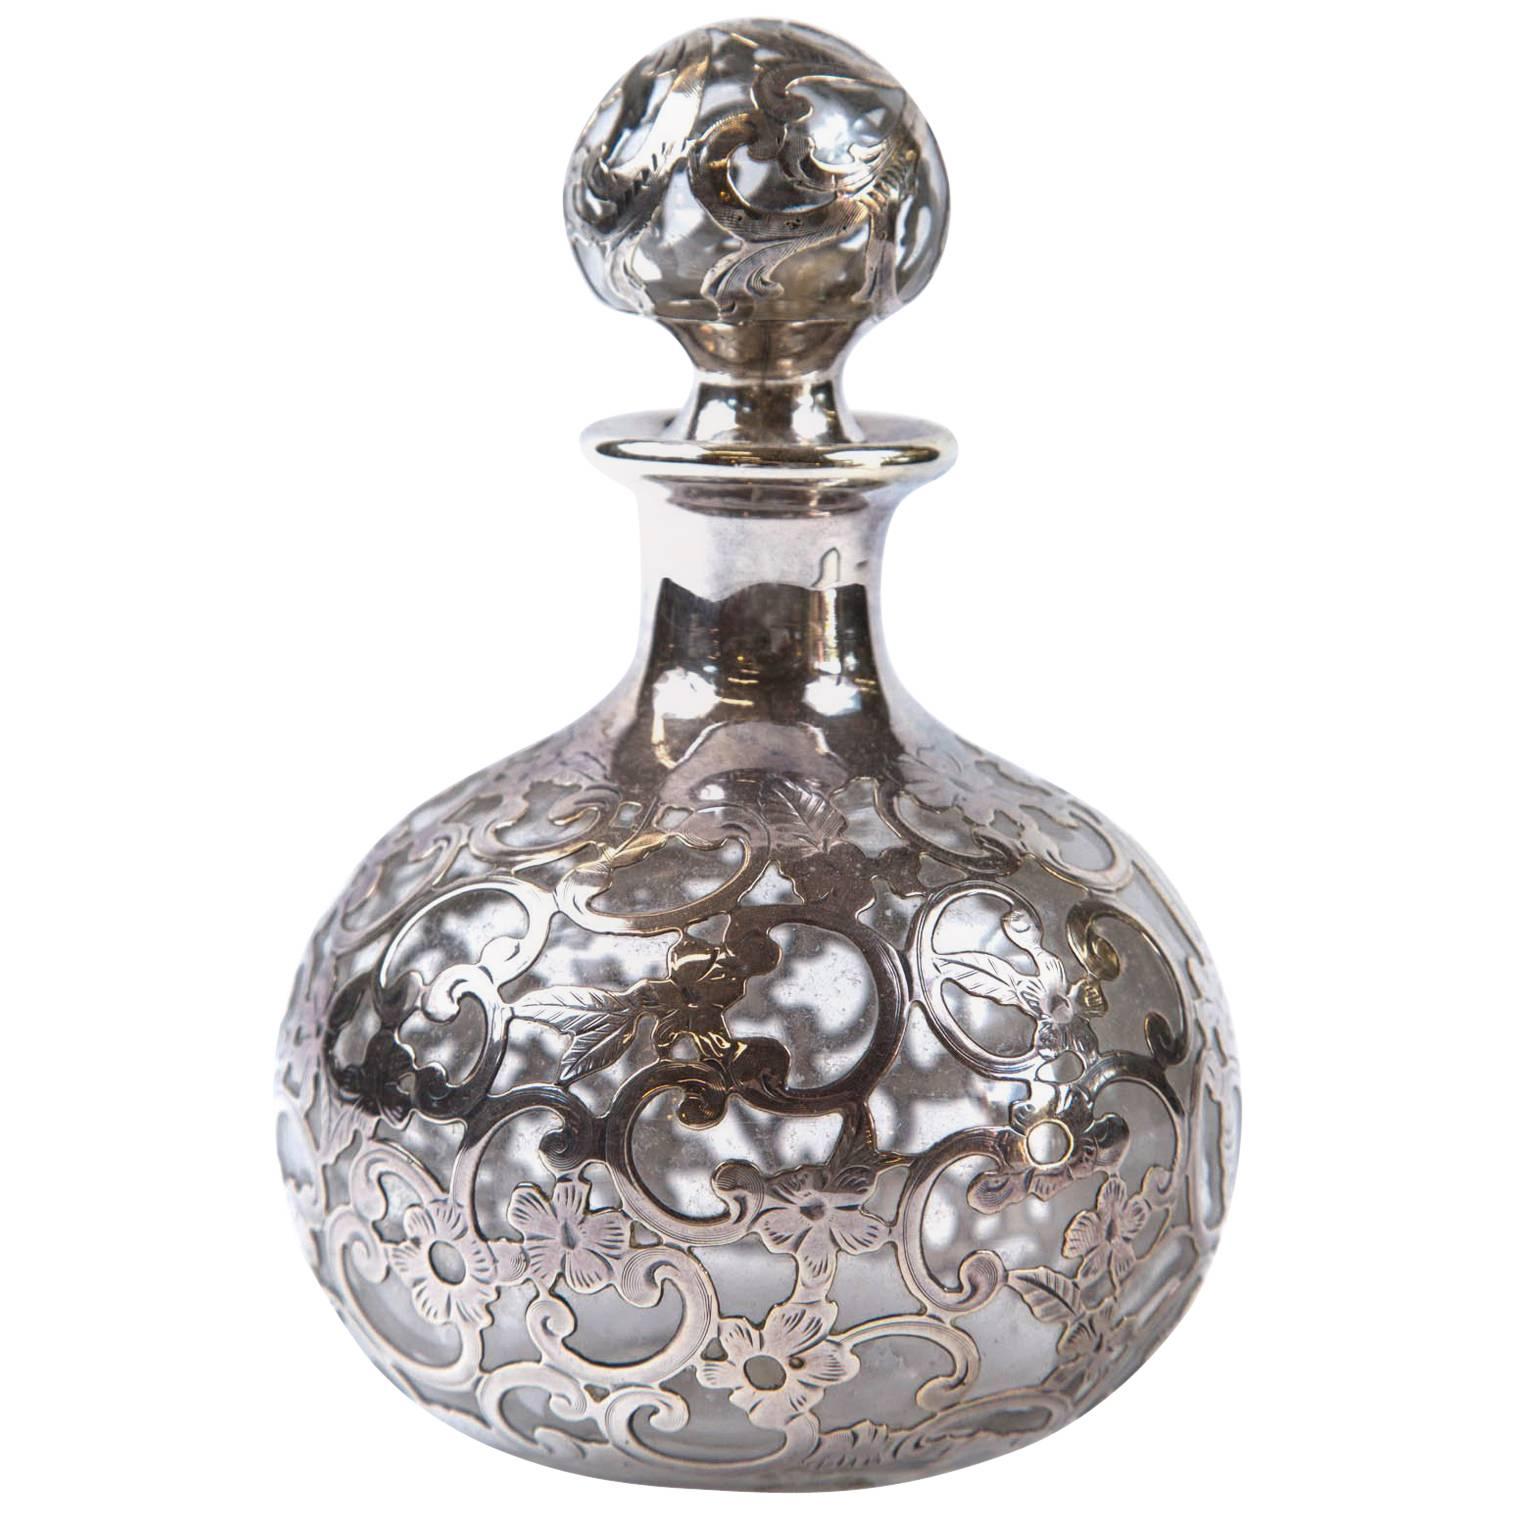 Antique Sterling Silver Overlay Perfume Bottle Monogrammed